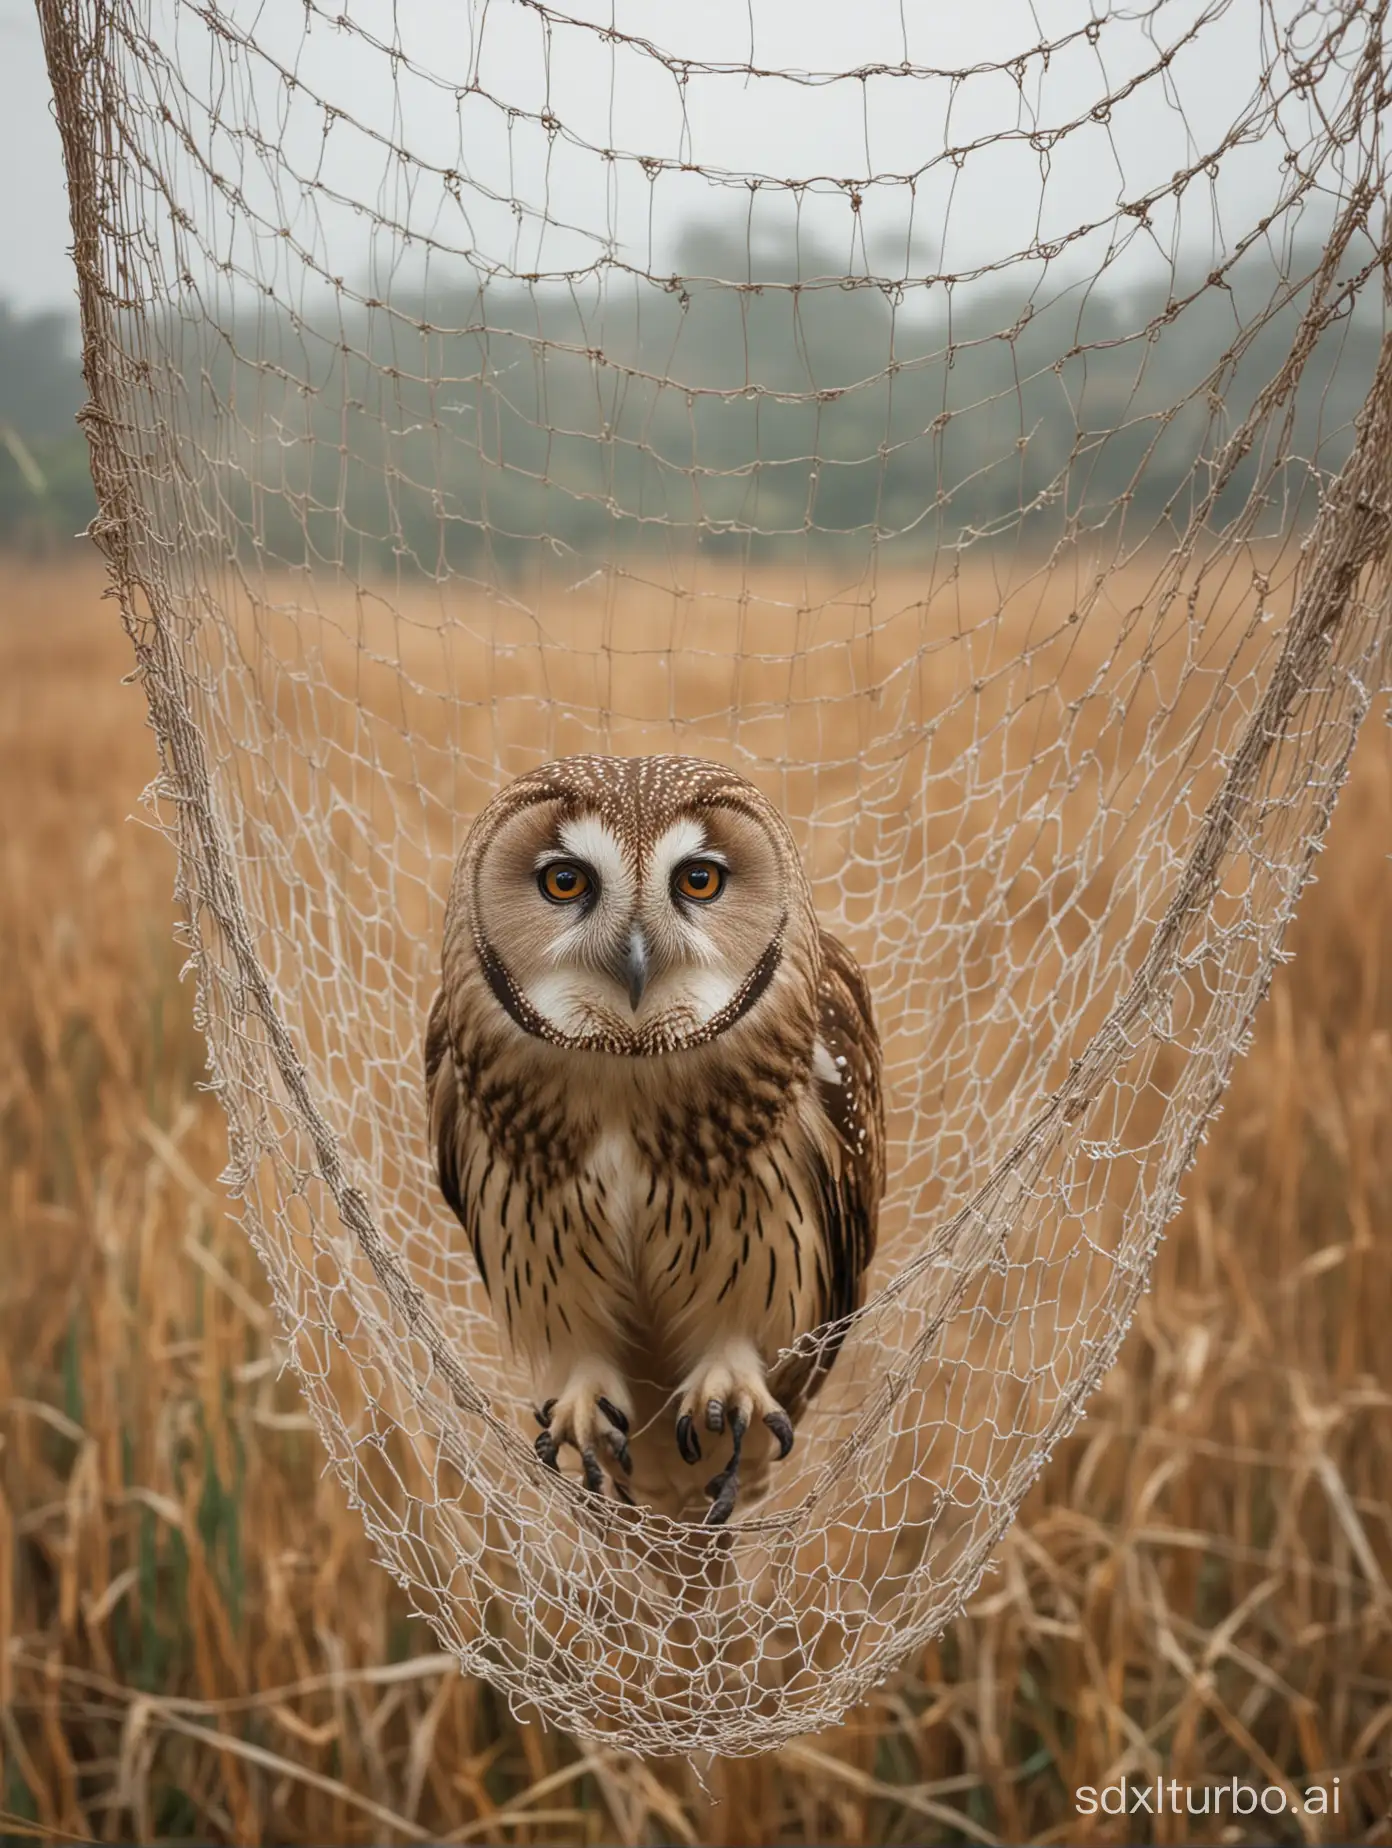 Eastern-Grass-Owl-Caught-in-AntiBird-Net-on-Taiwan-Farmland